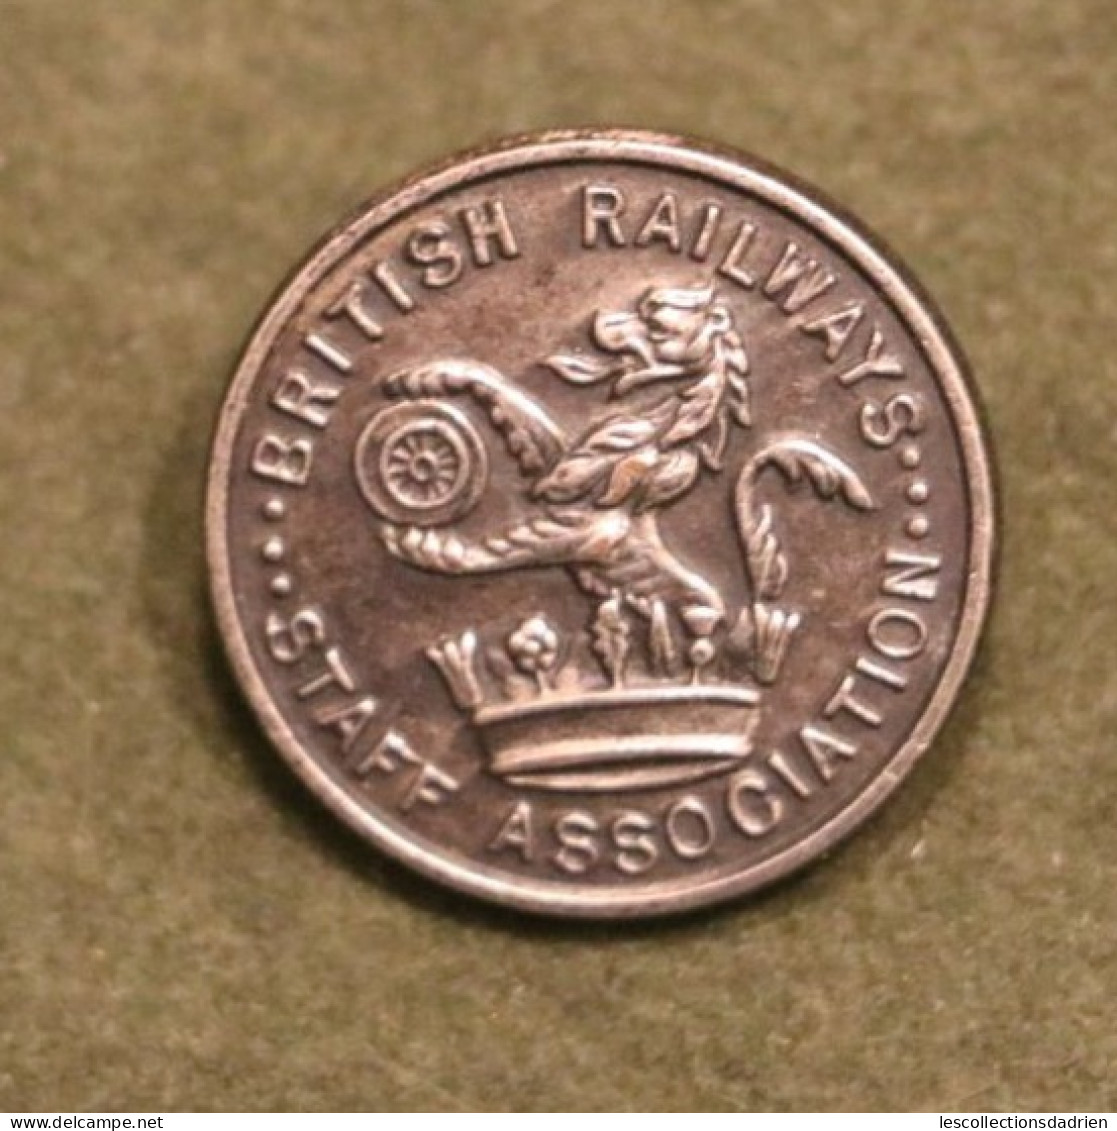 Insigne Broche British Railways Staff Association - Badge Pin Brooch - Train - Ferrocarril